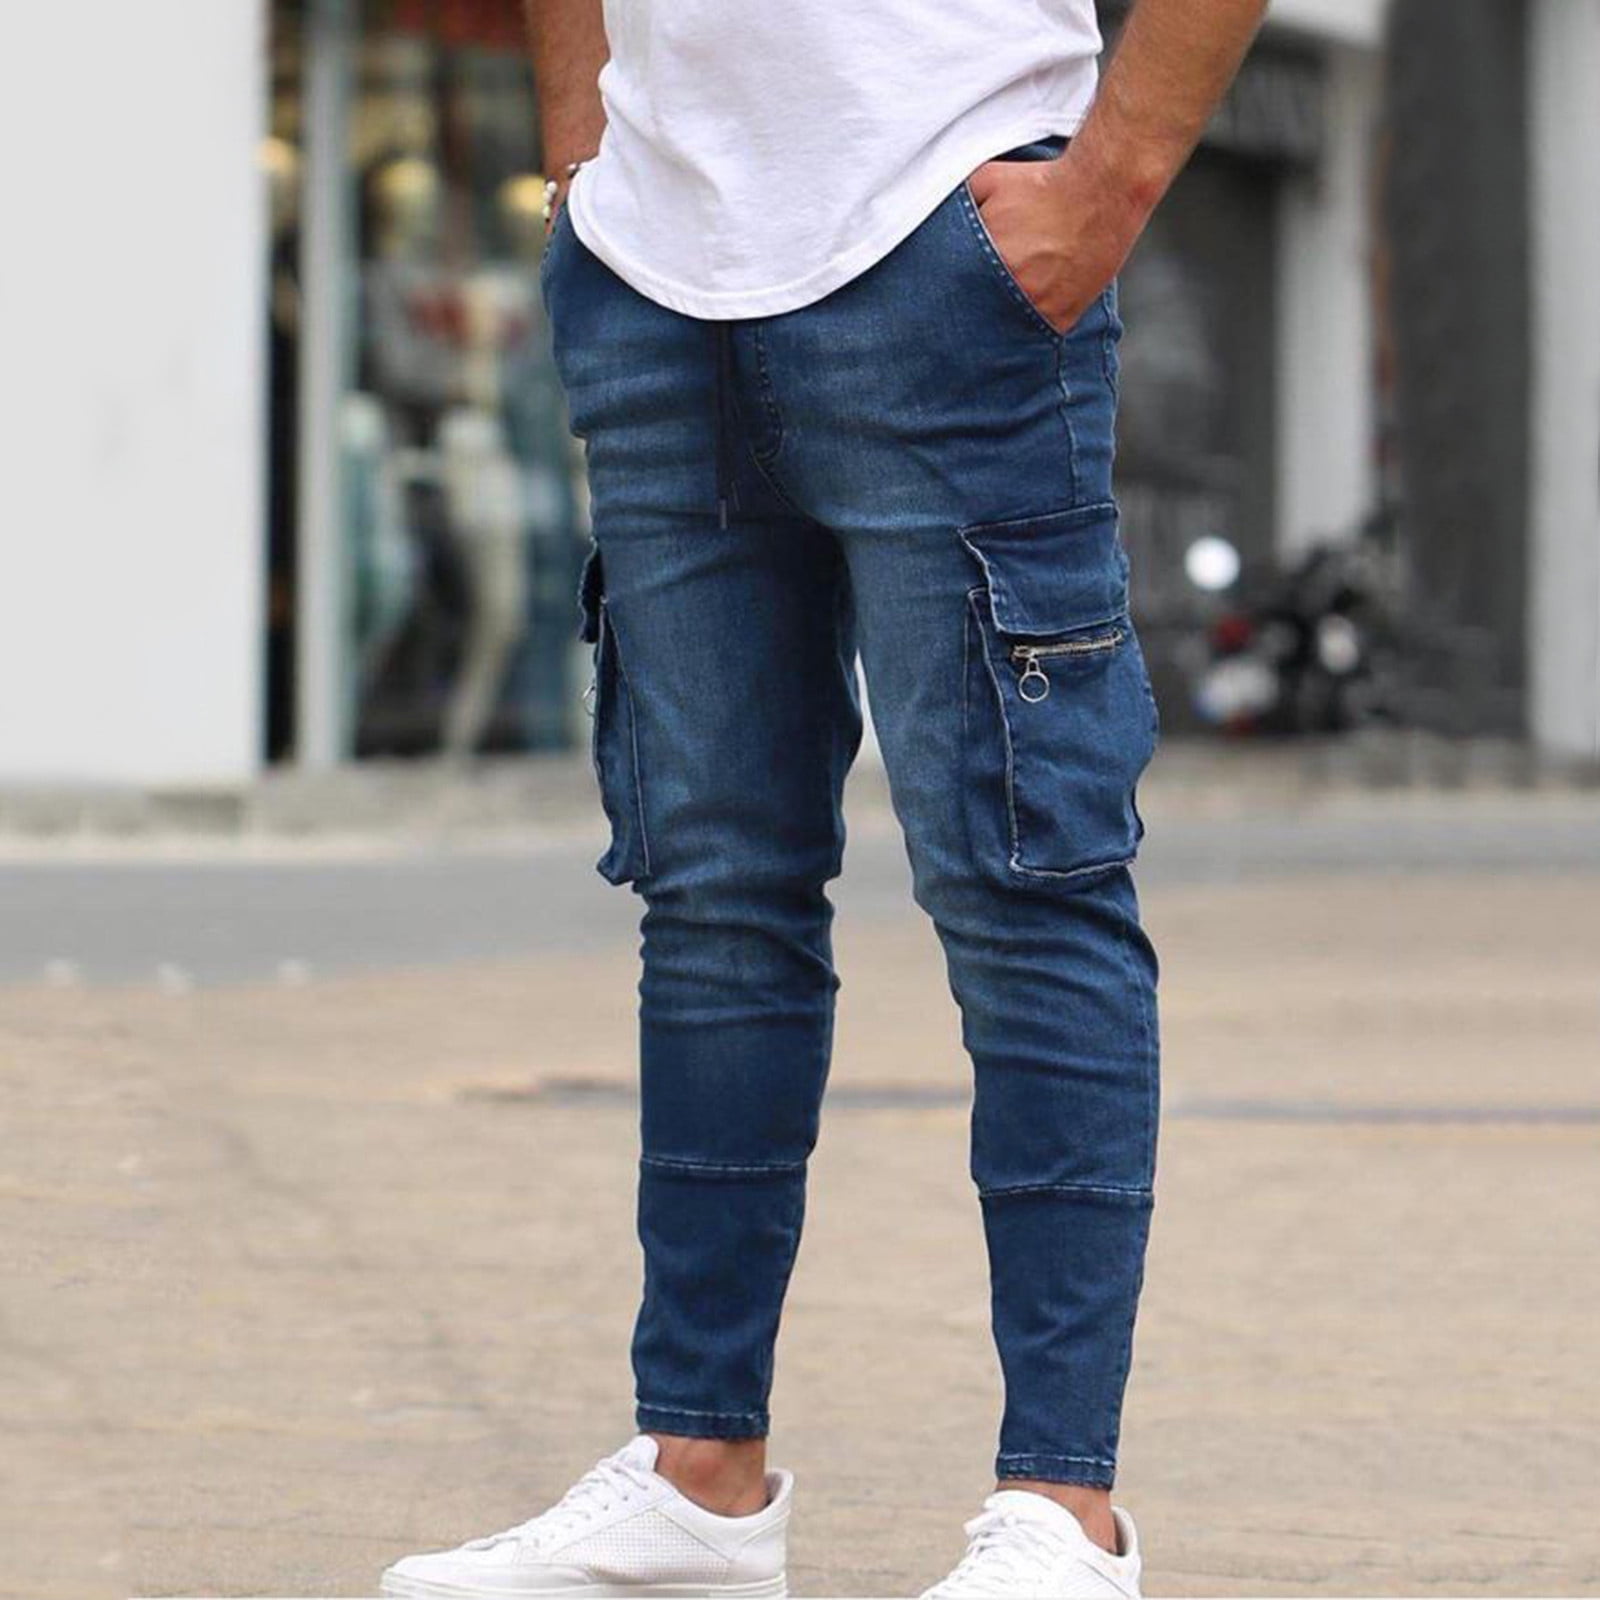 Jeans For Men's Fashion Slim Pants Trousers - Walmart.com